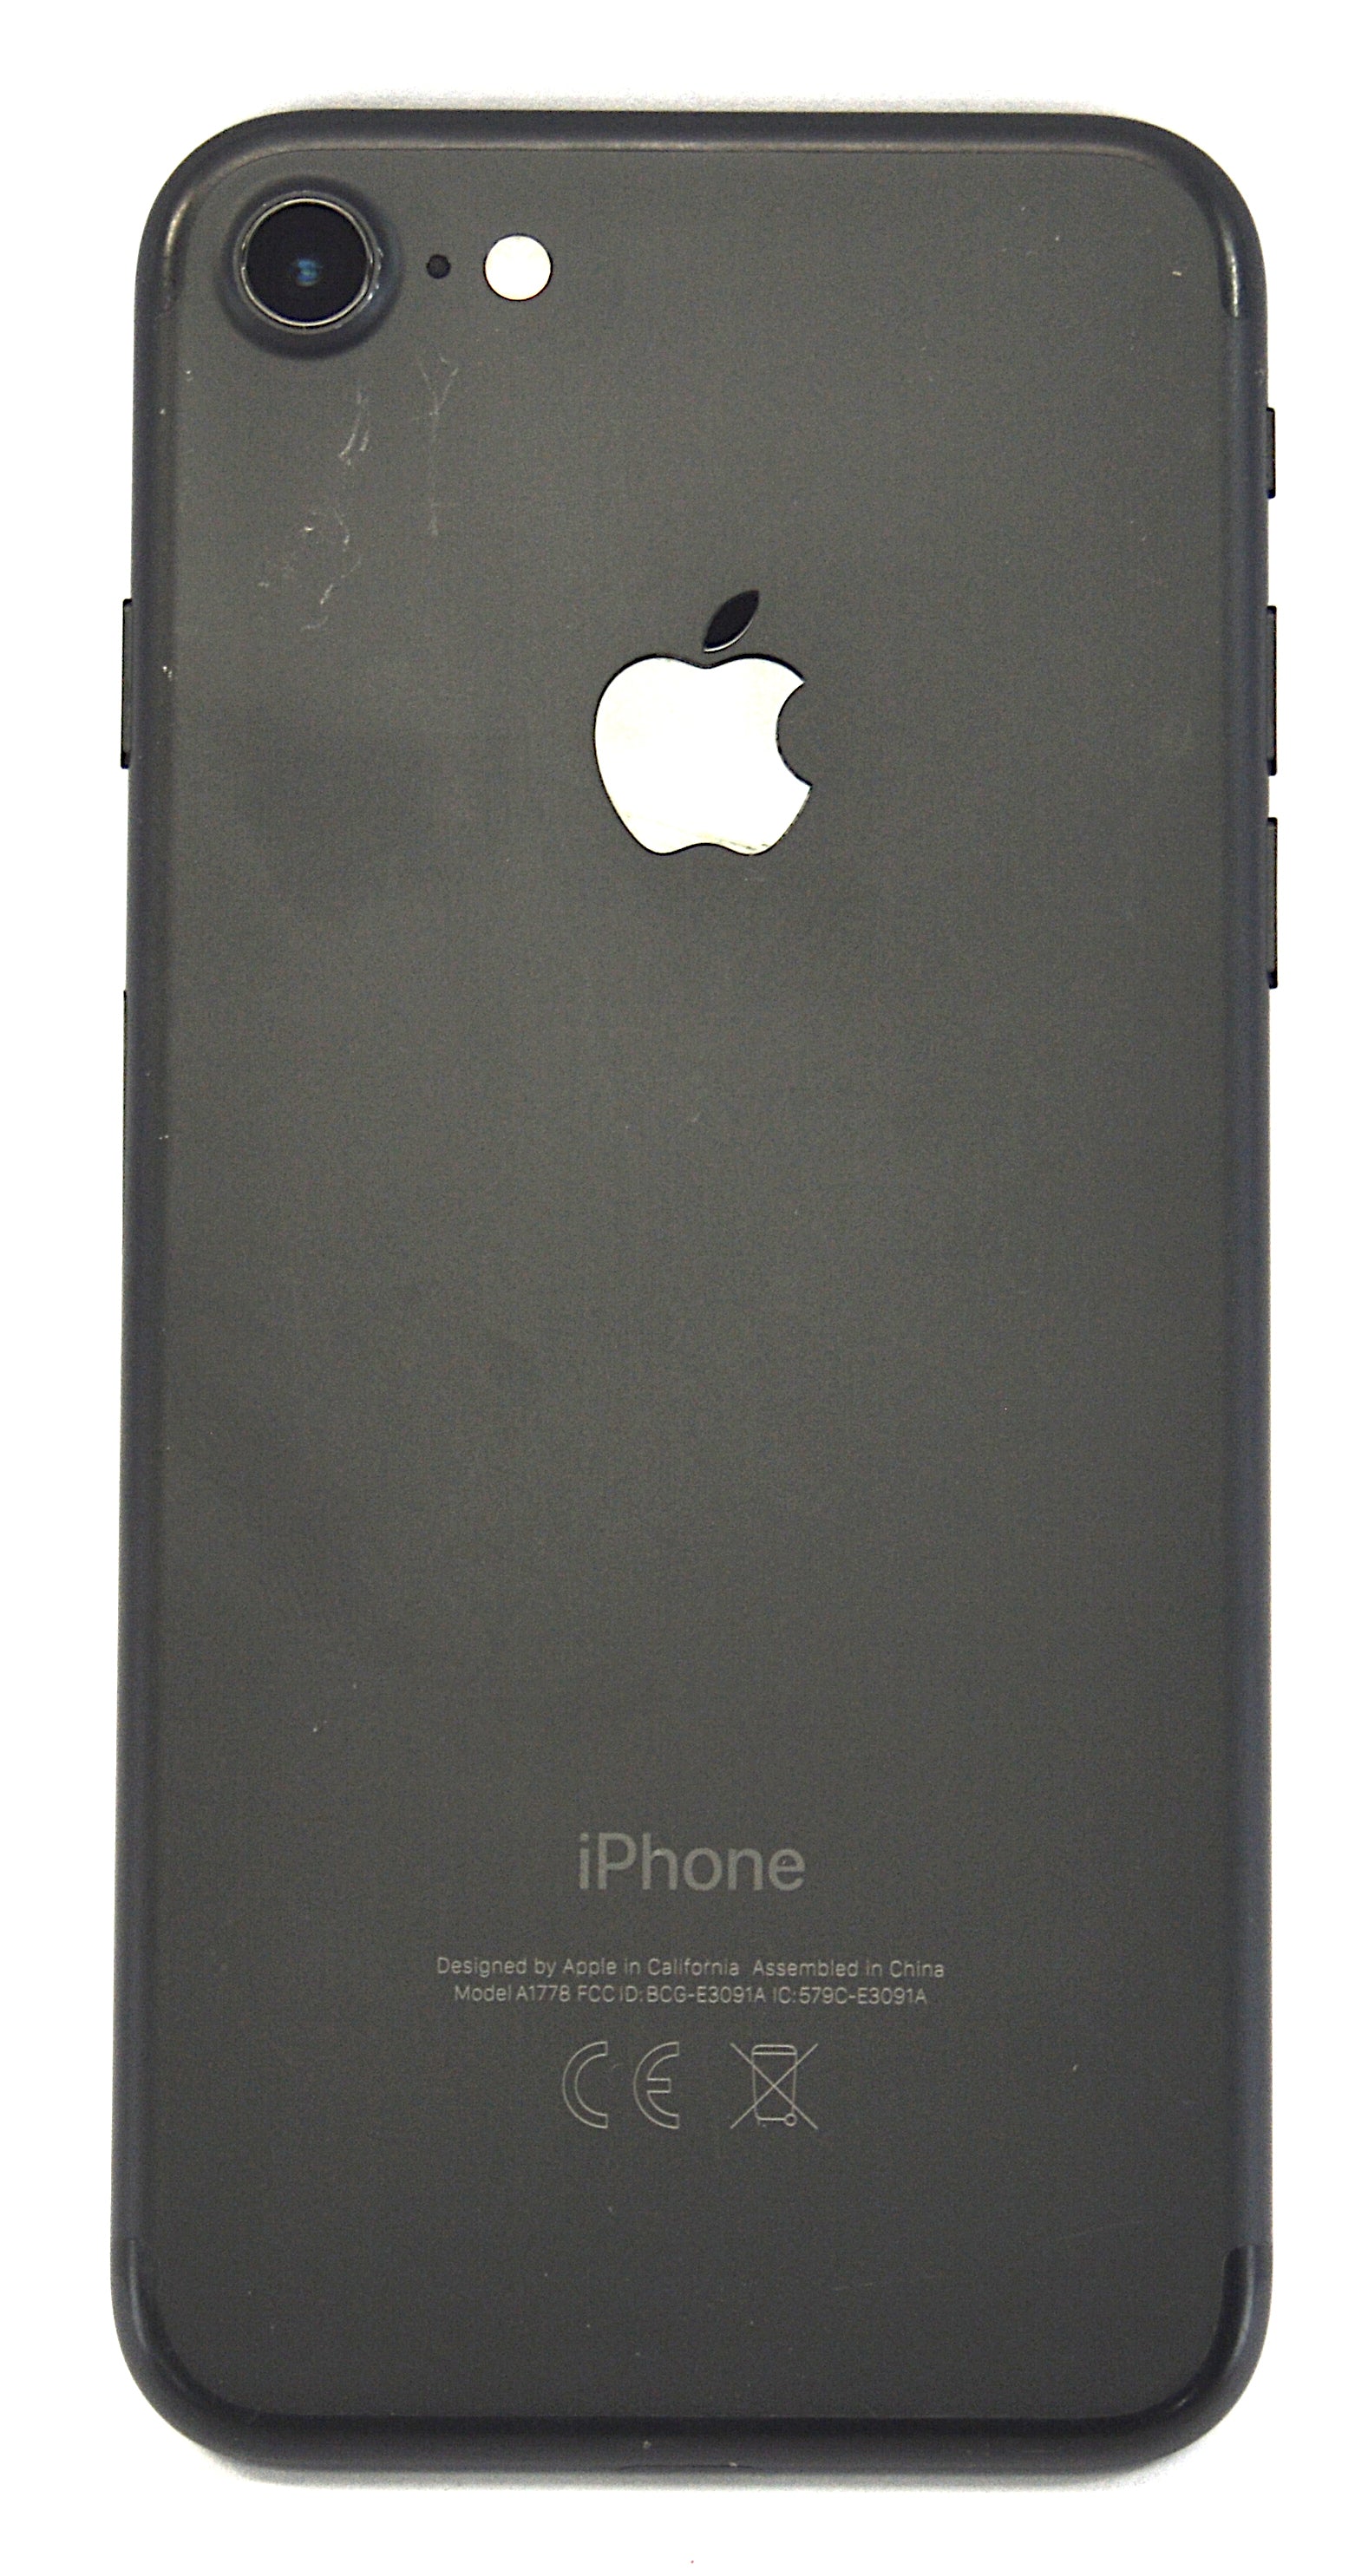 Apple iPhone 7 Smartphone, 32GB, Network Unlocked, Black, A1778